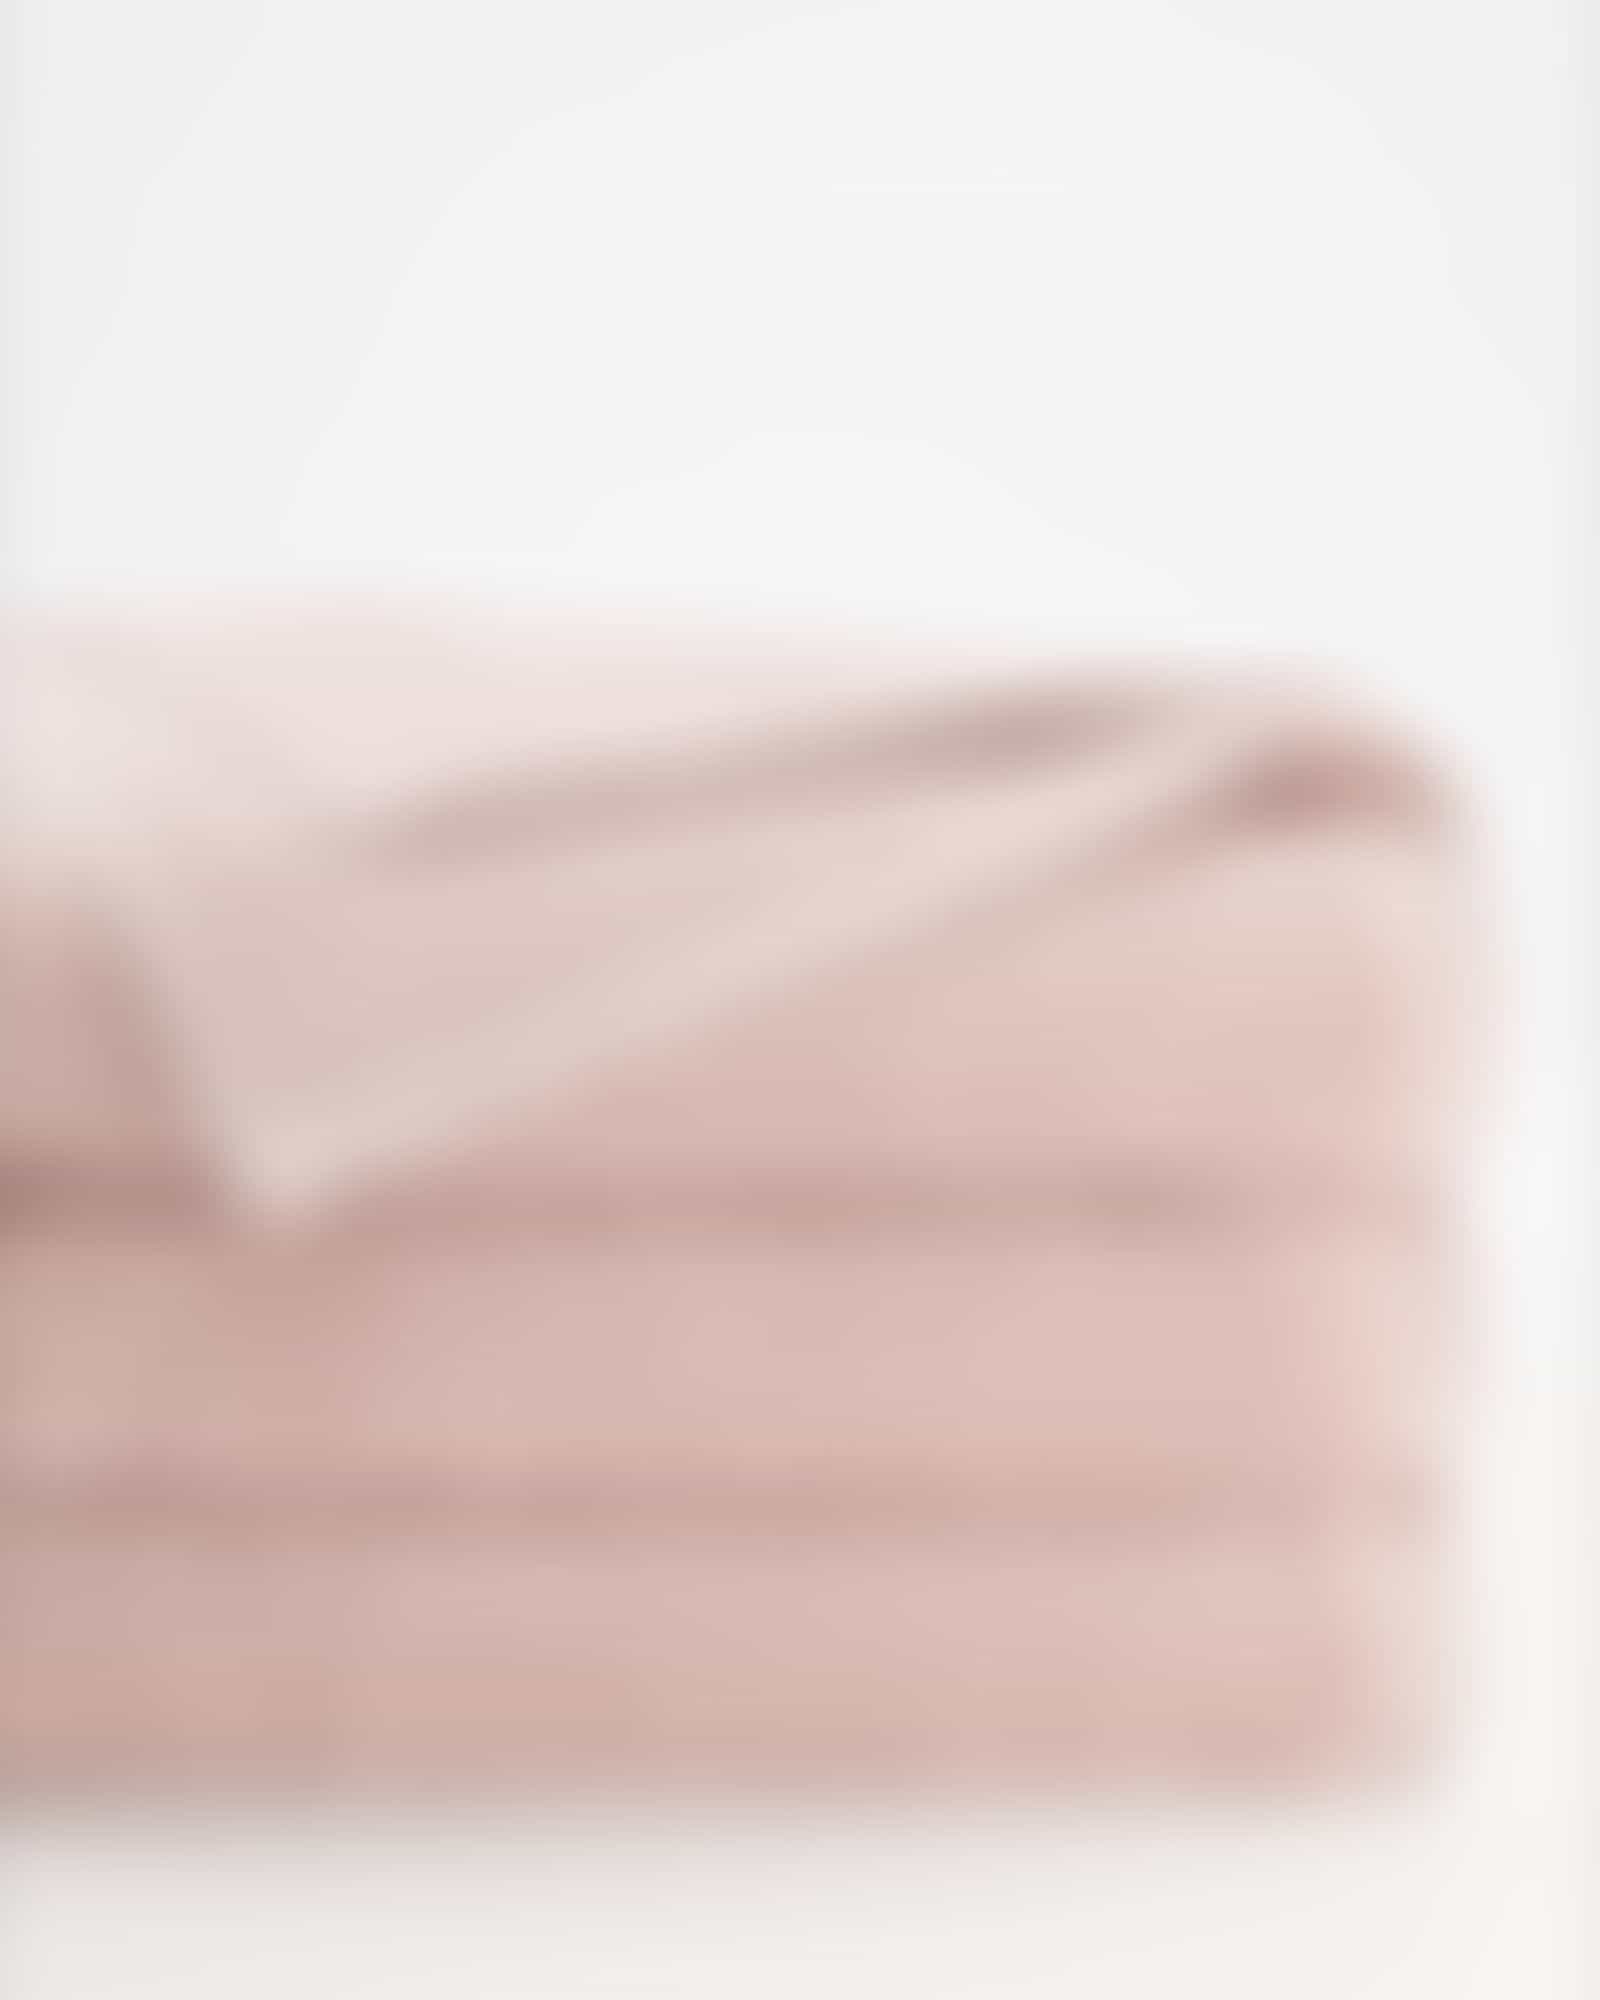 Cawö Handtücher Pure 6500 - Farbe: puder - 383 - Waschhandschuh 16x22 cm